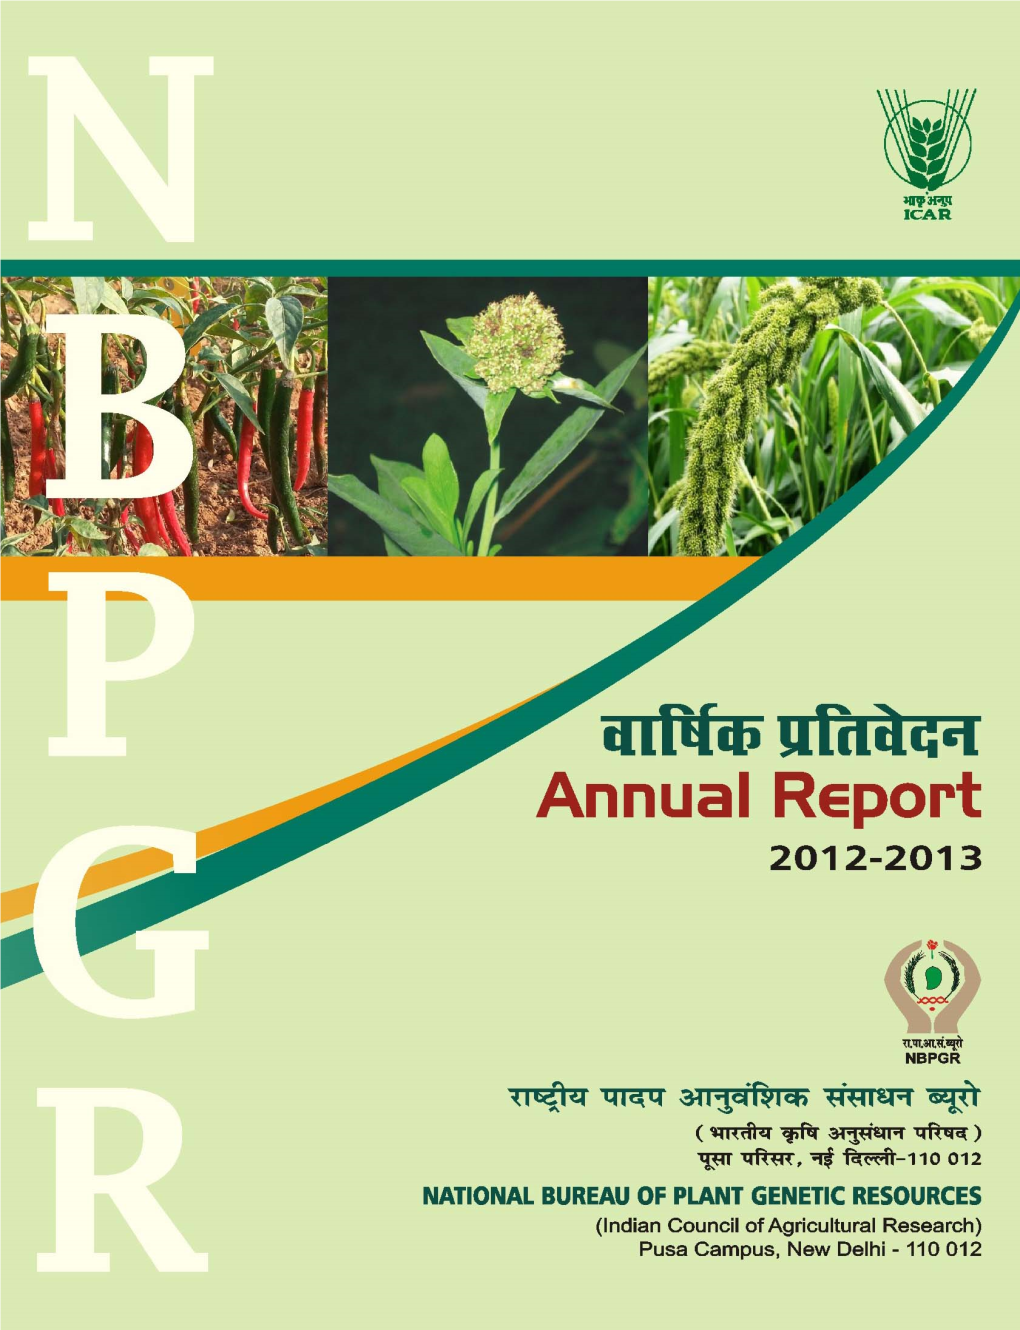 NBPGR Okf"Kzd Izfrosnu ANNUAL REPORT 2012-2013